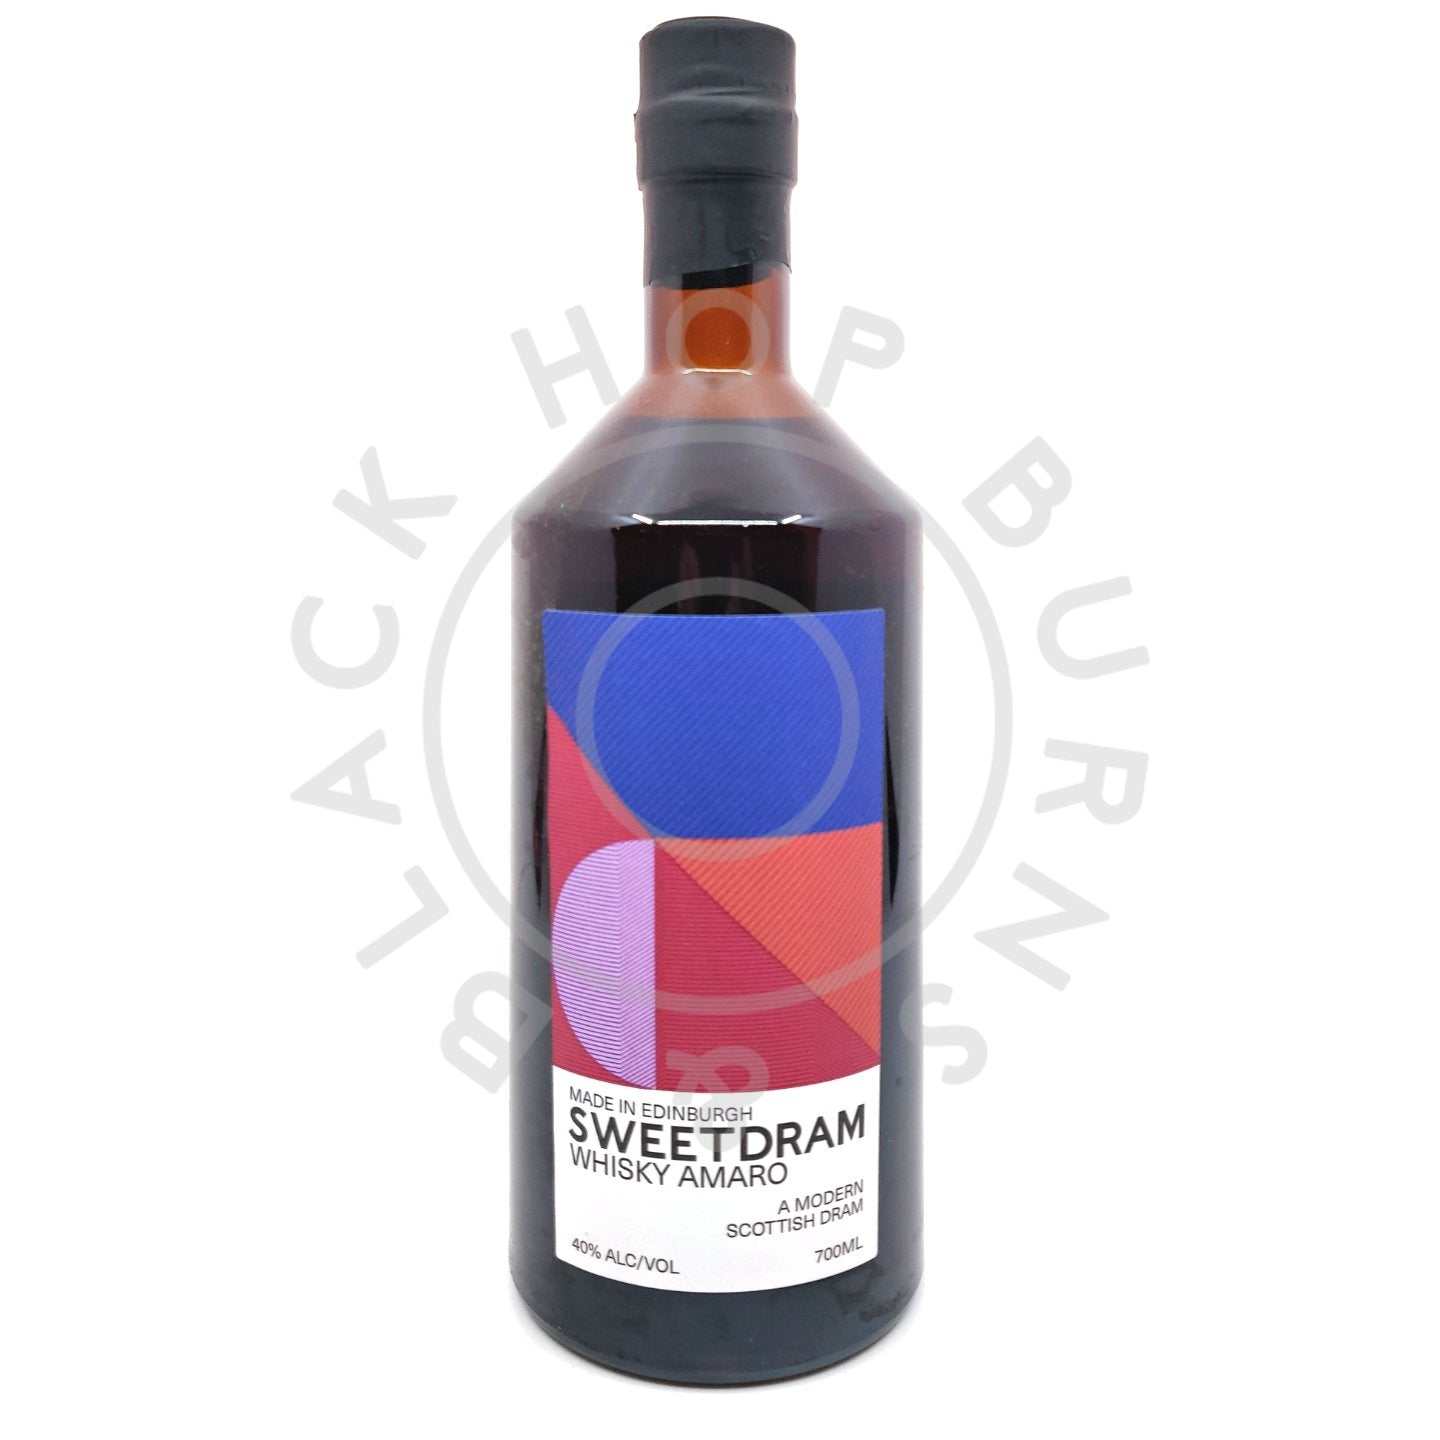 Sweetdram Whisky Amaro 40% (700ml)-Hop Burns & Black